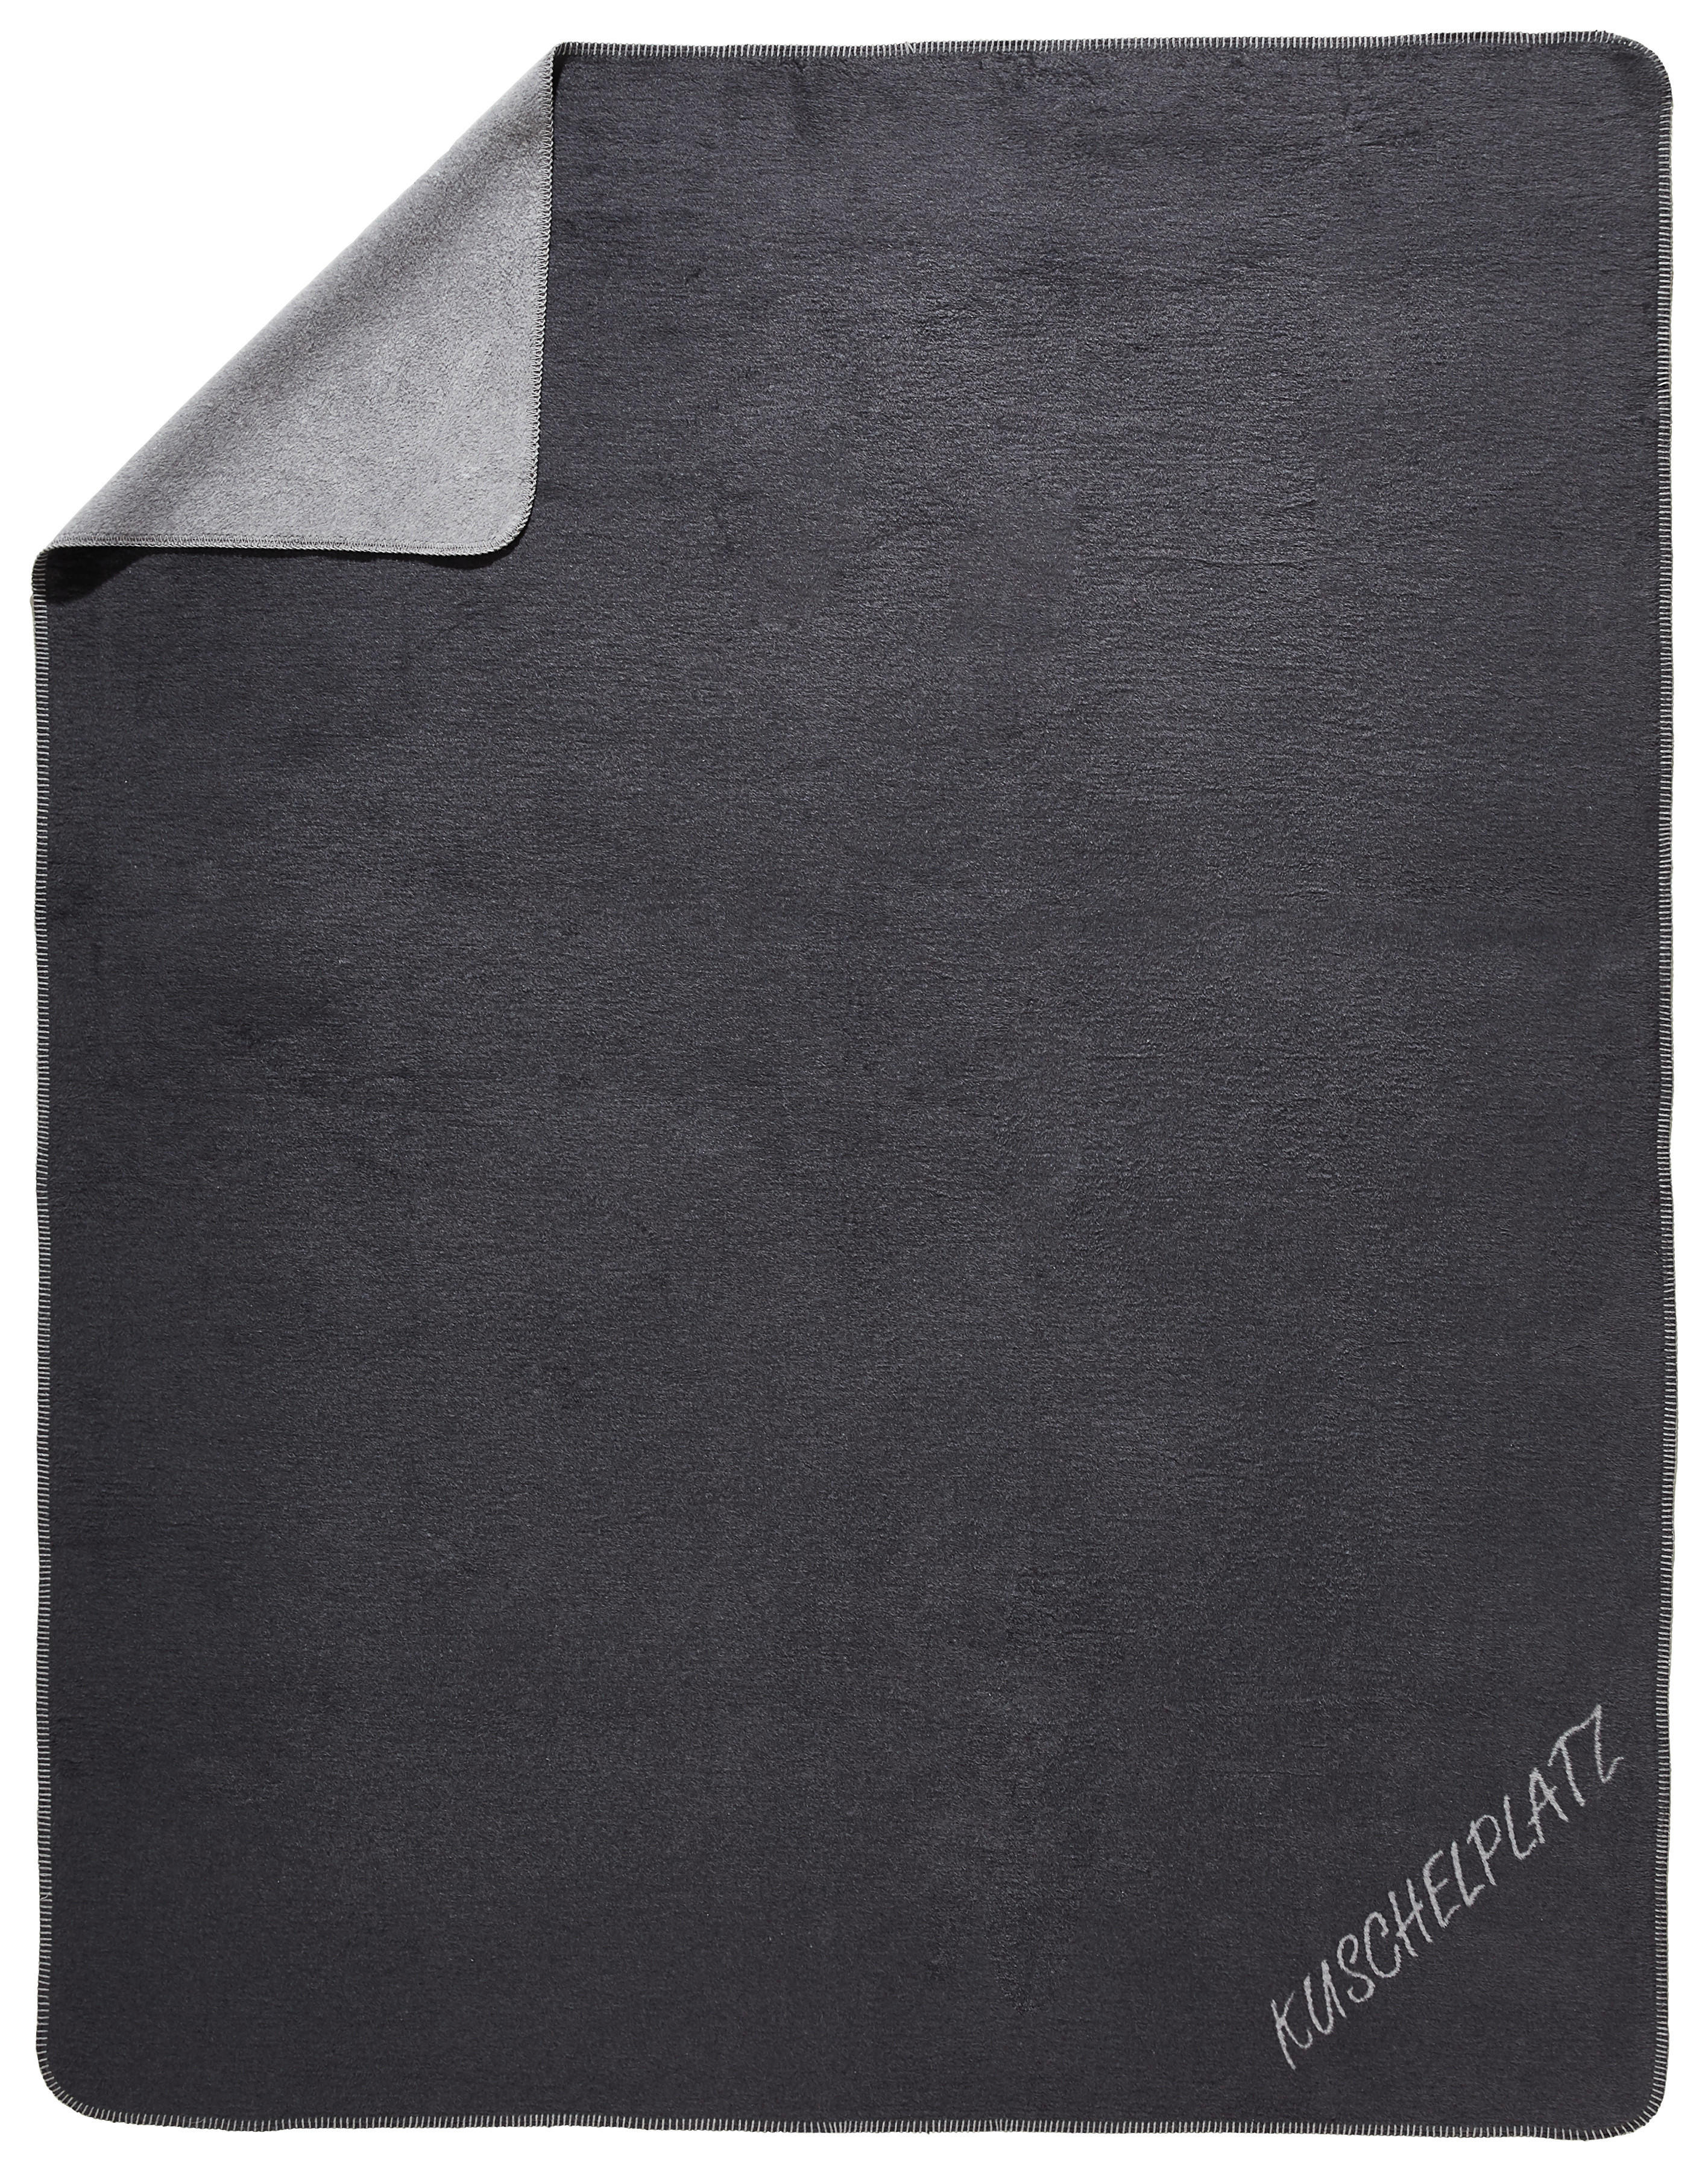 WOHNDECKE KUSCHELPLATZ NOVEL 150/200 cm  - Silberfarben/Grau, Basics, Textil (150/200cm) - Novel